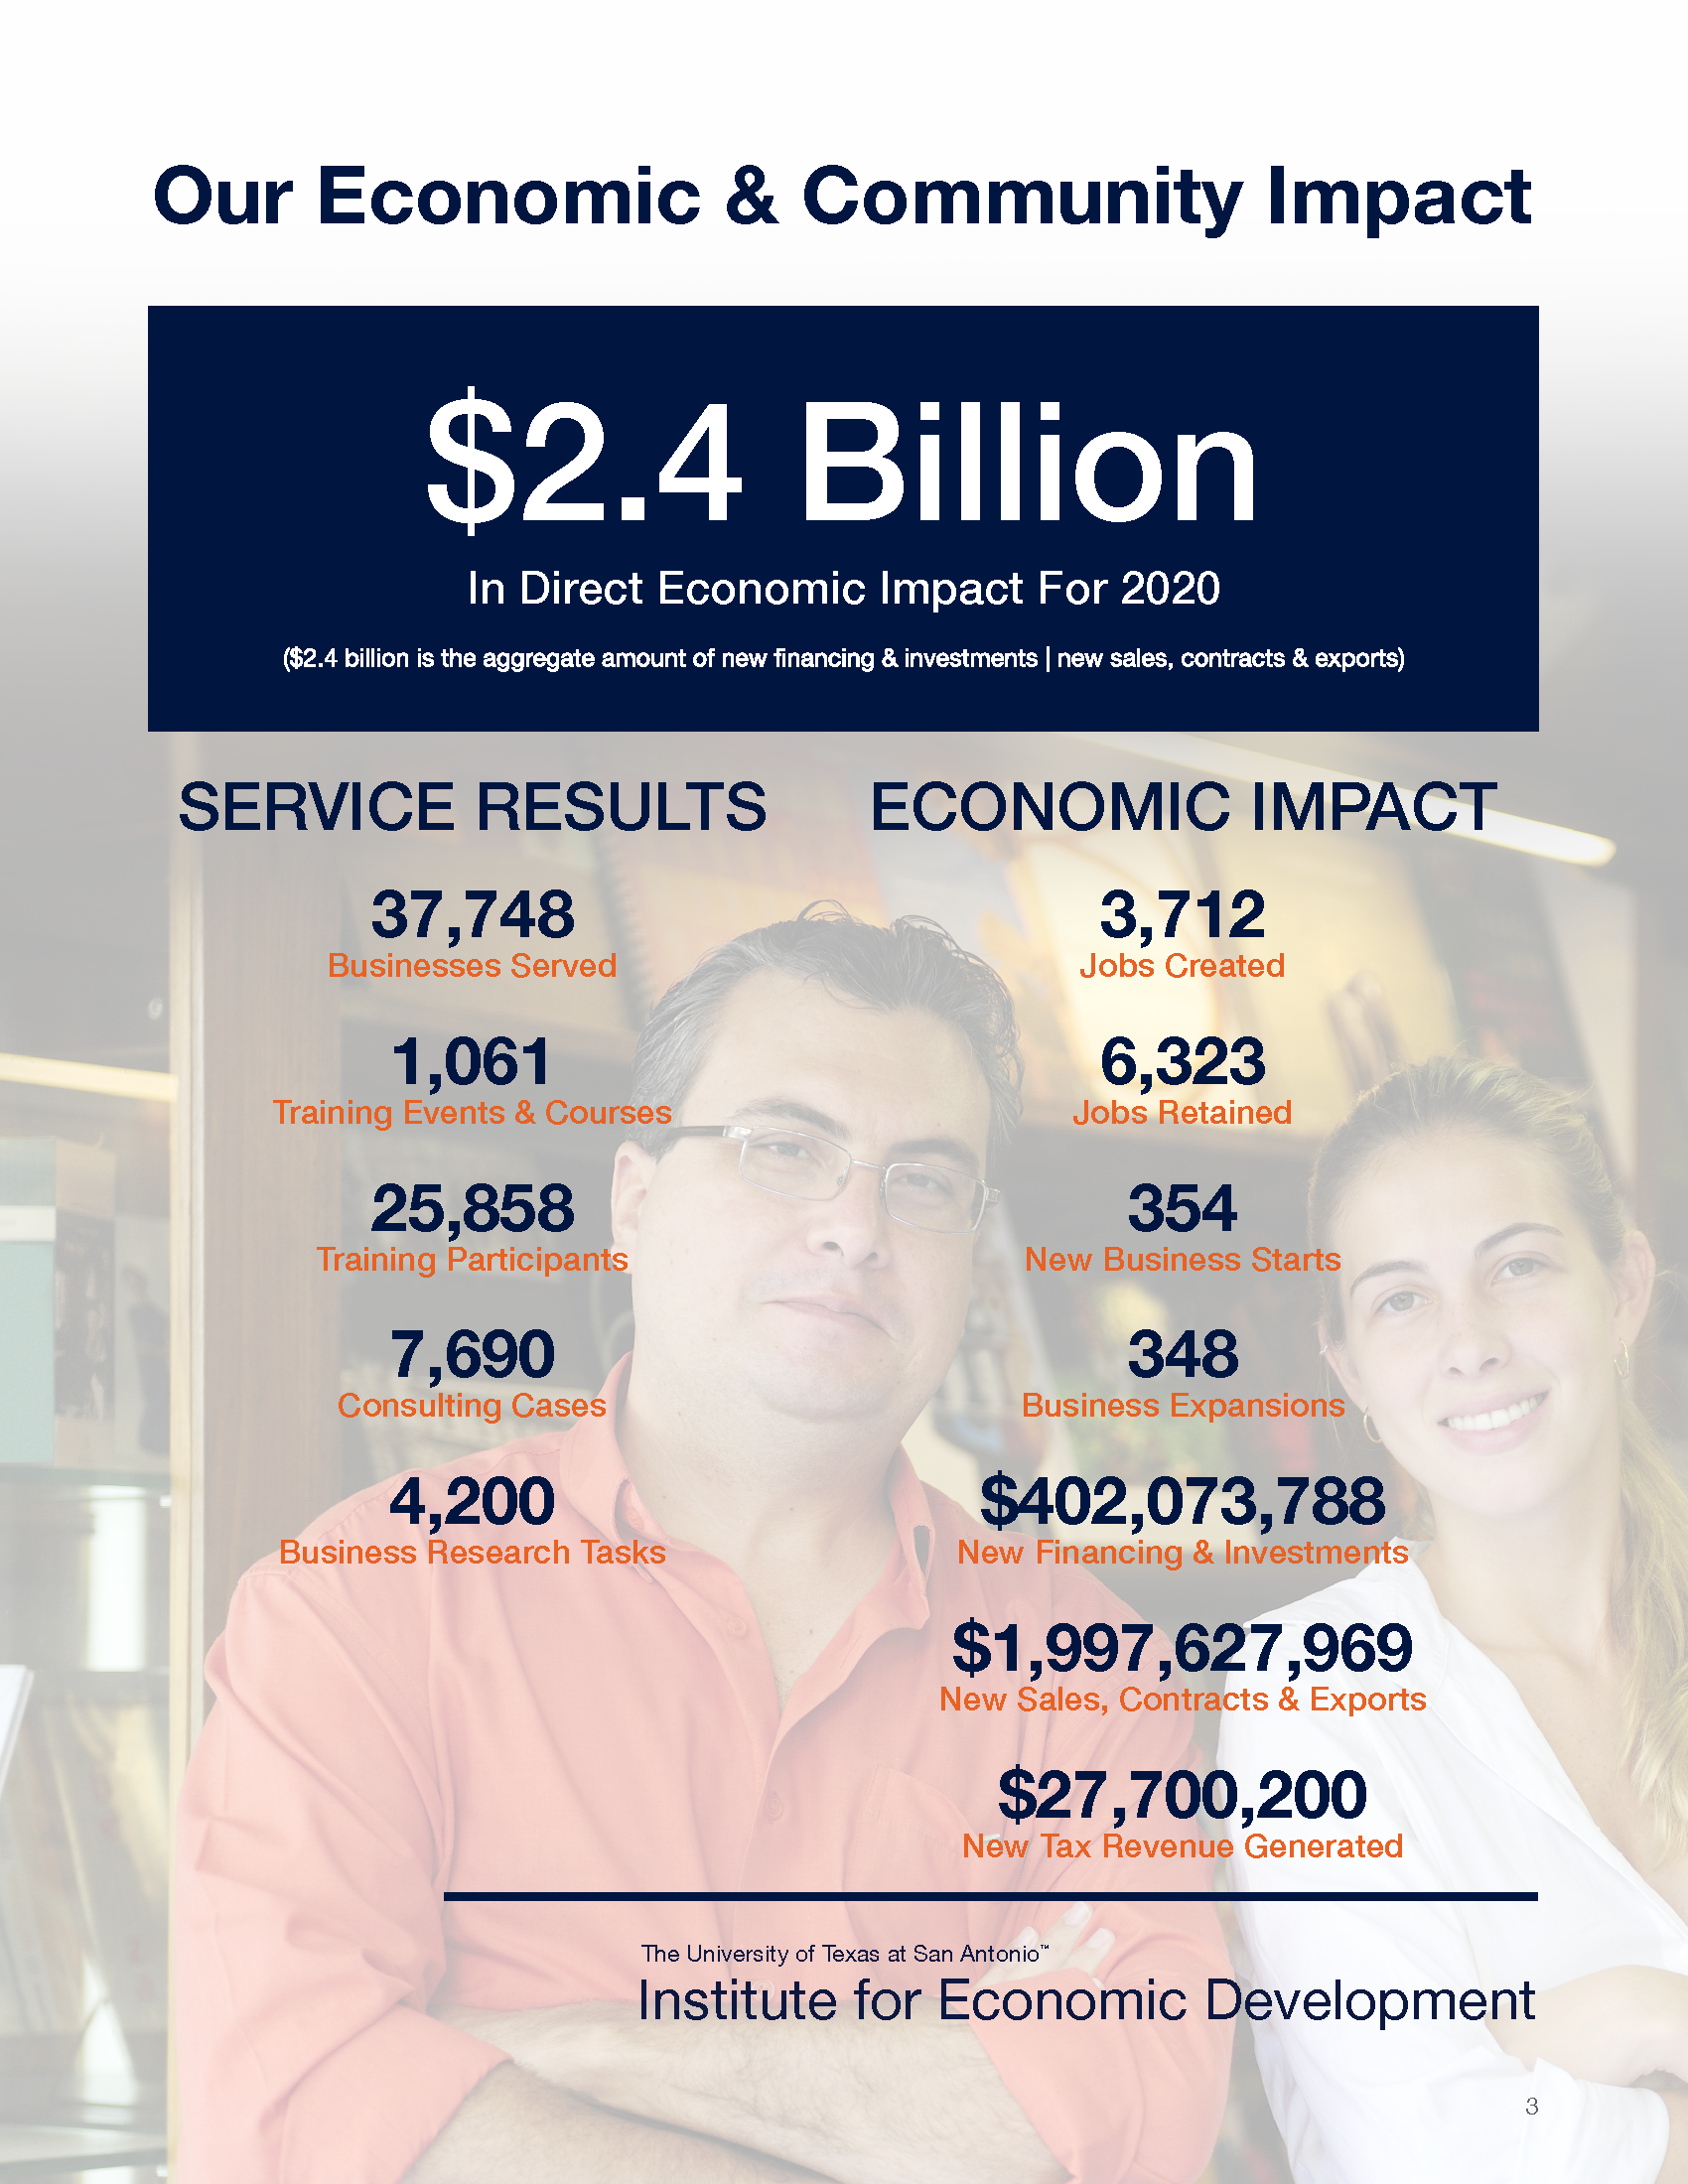 Institute for Economic Development provided $2.4 billion impact in 2020